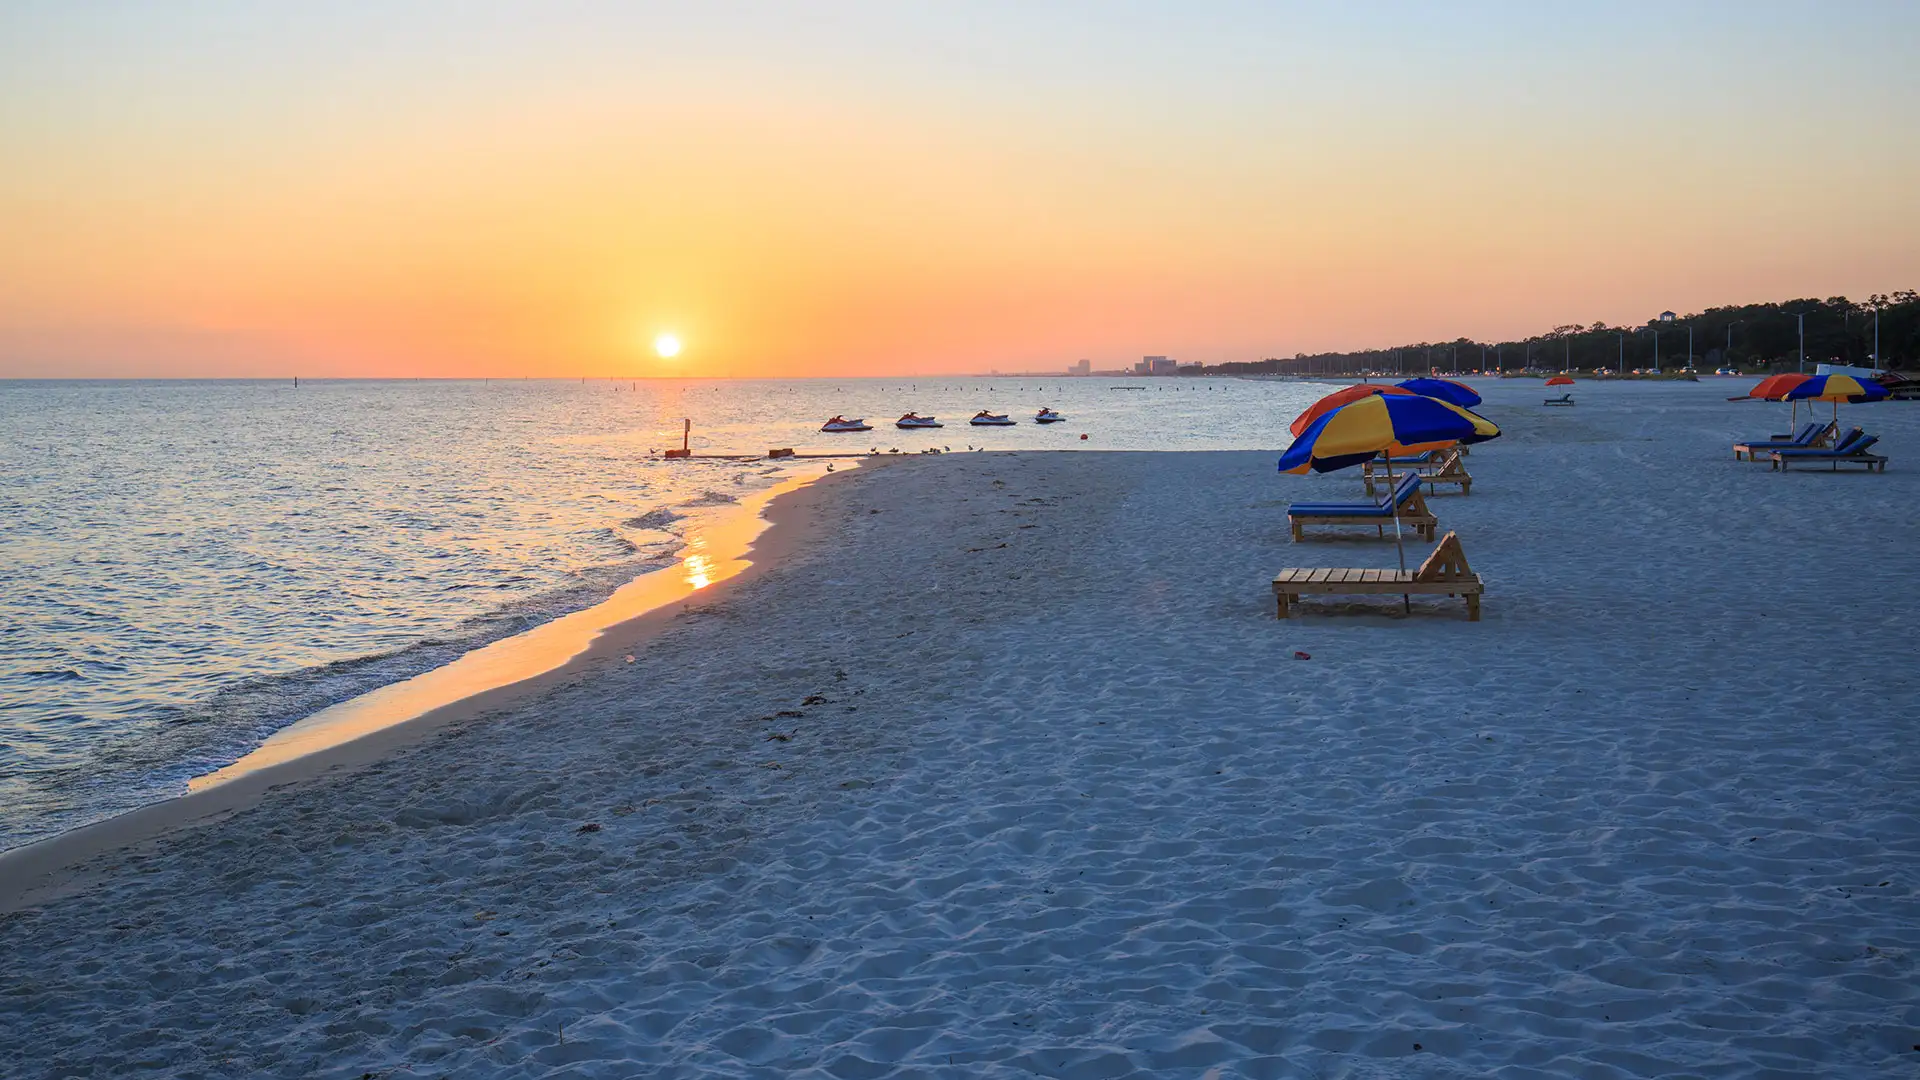 Biloxi beach at sunset; Courtesy of All Stock Photos/Shutterstock.com